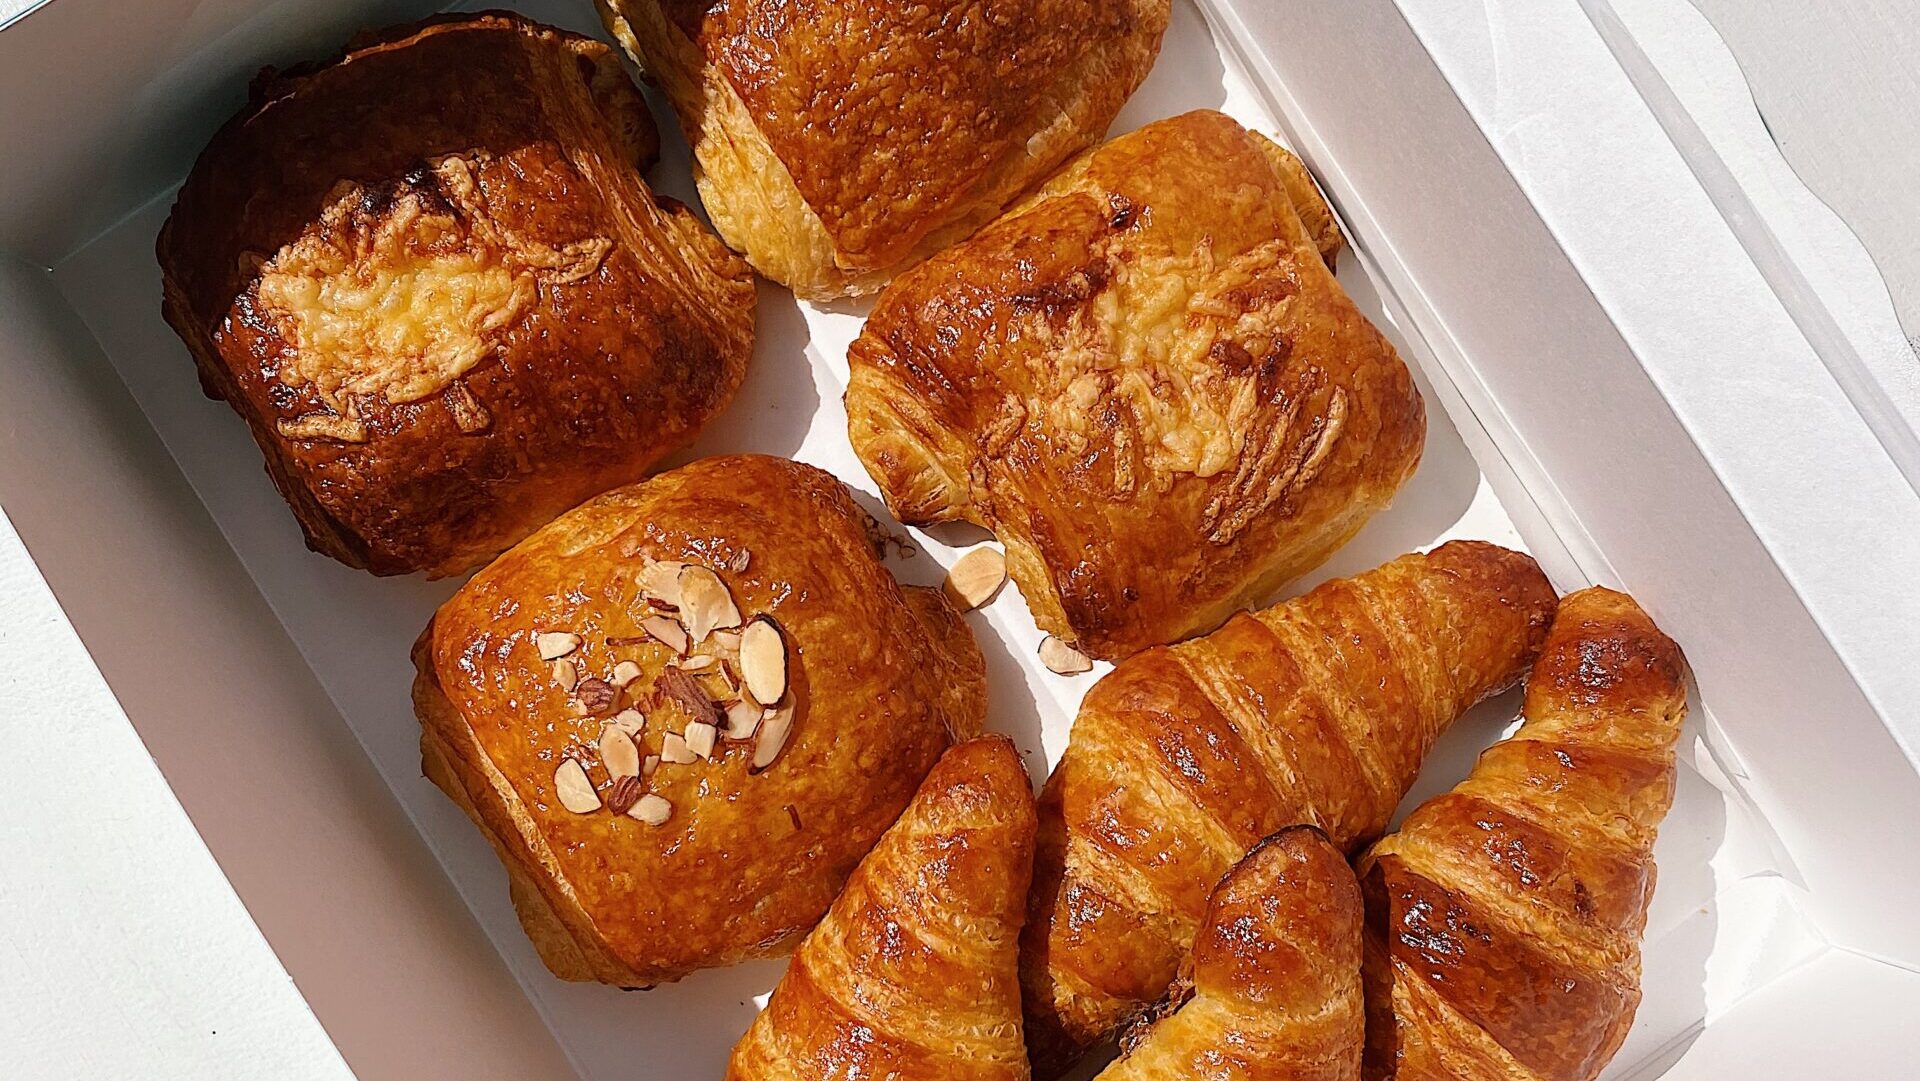 A box of various croissants